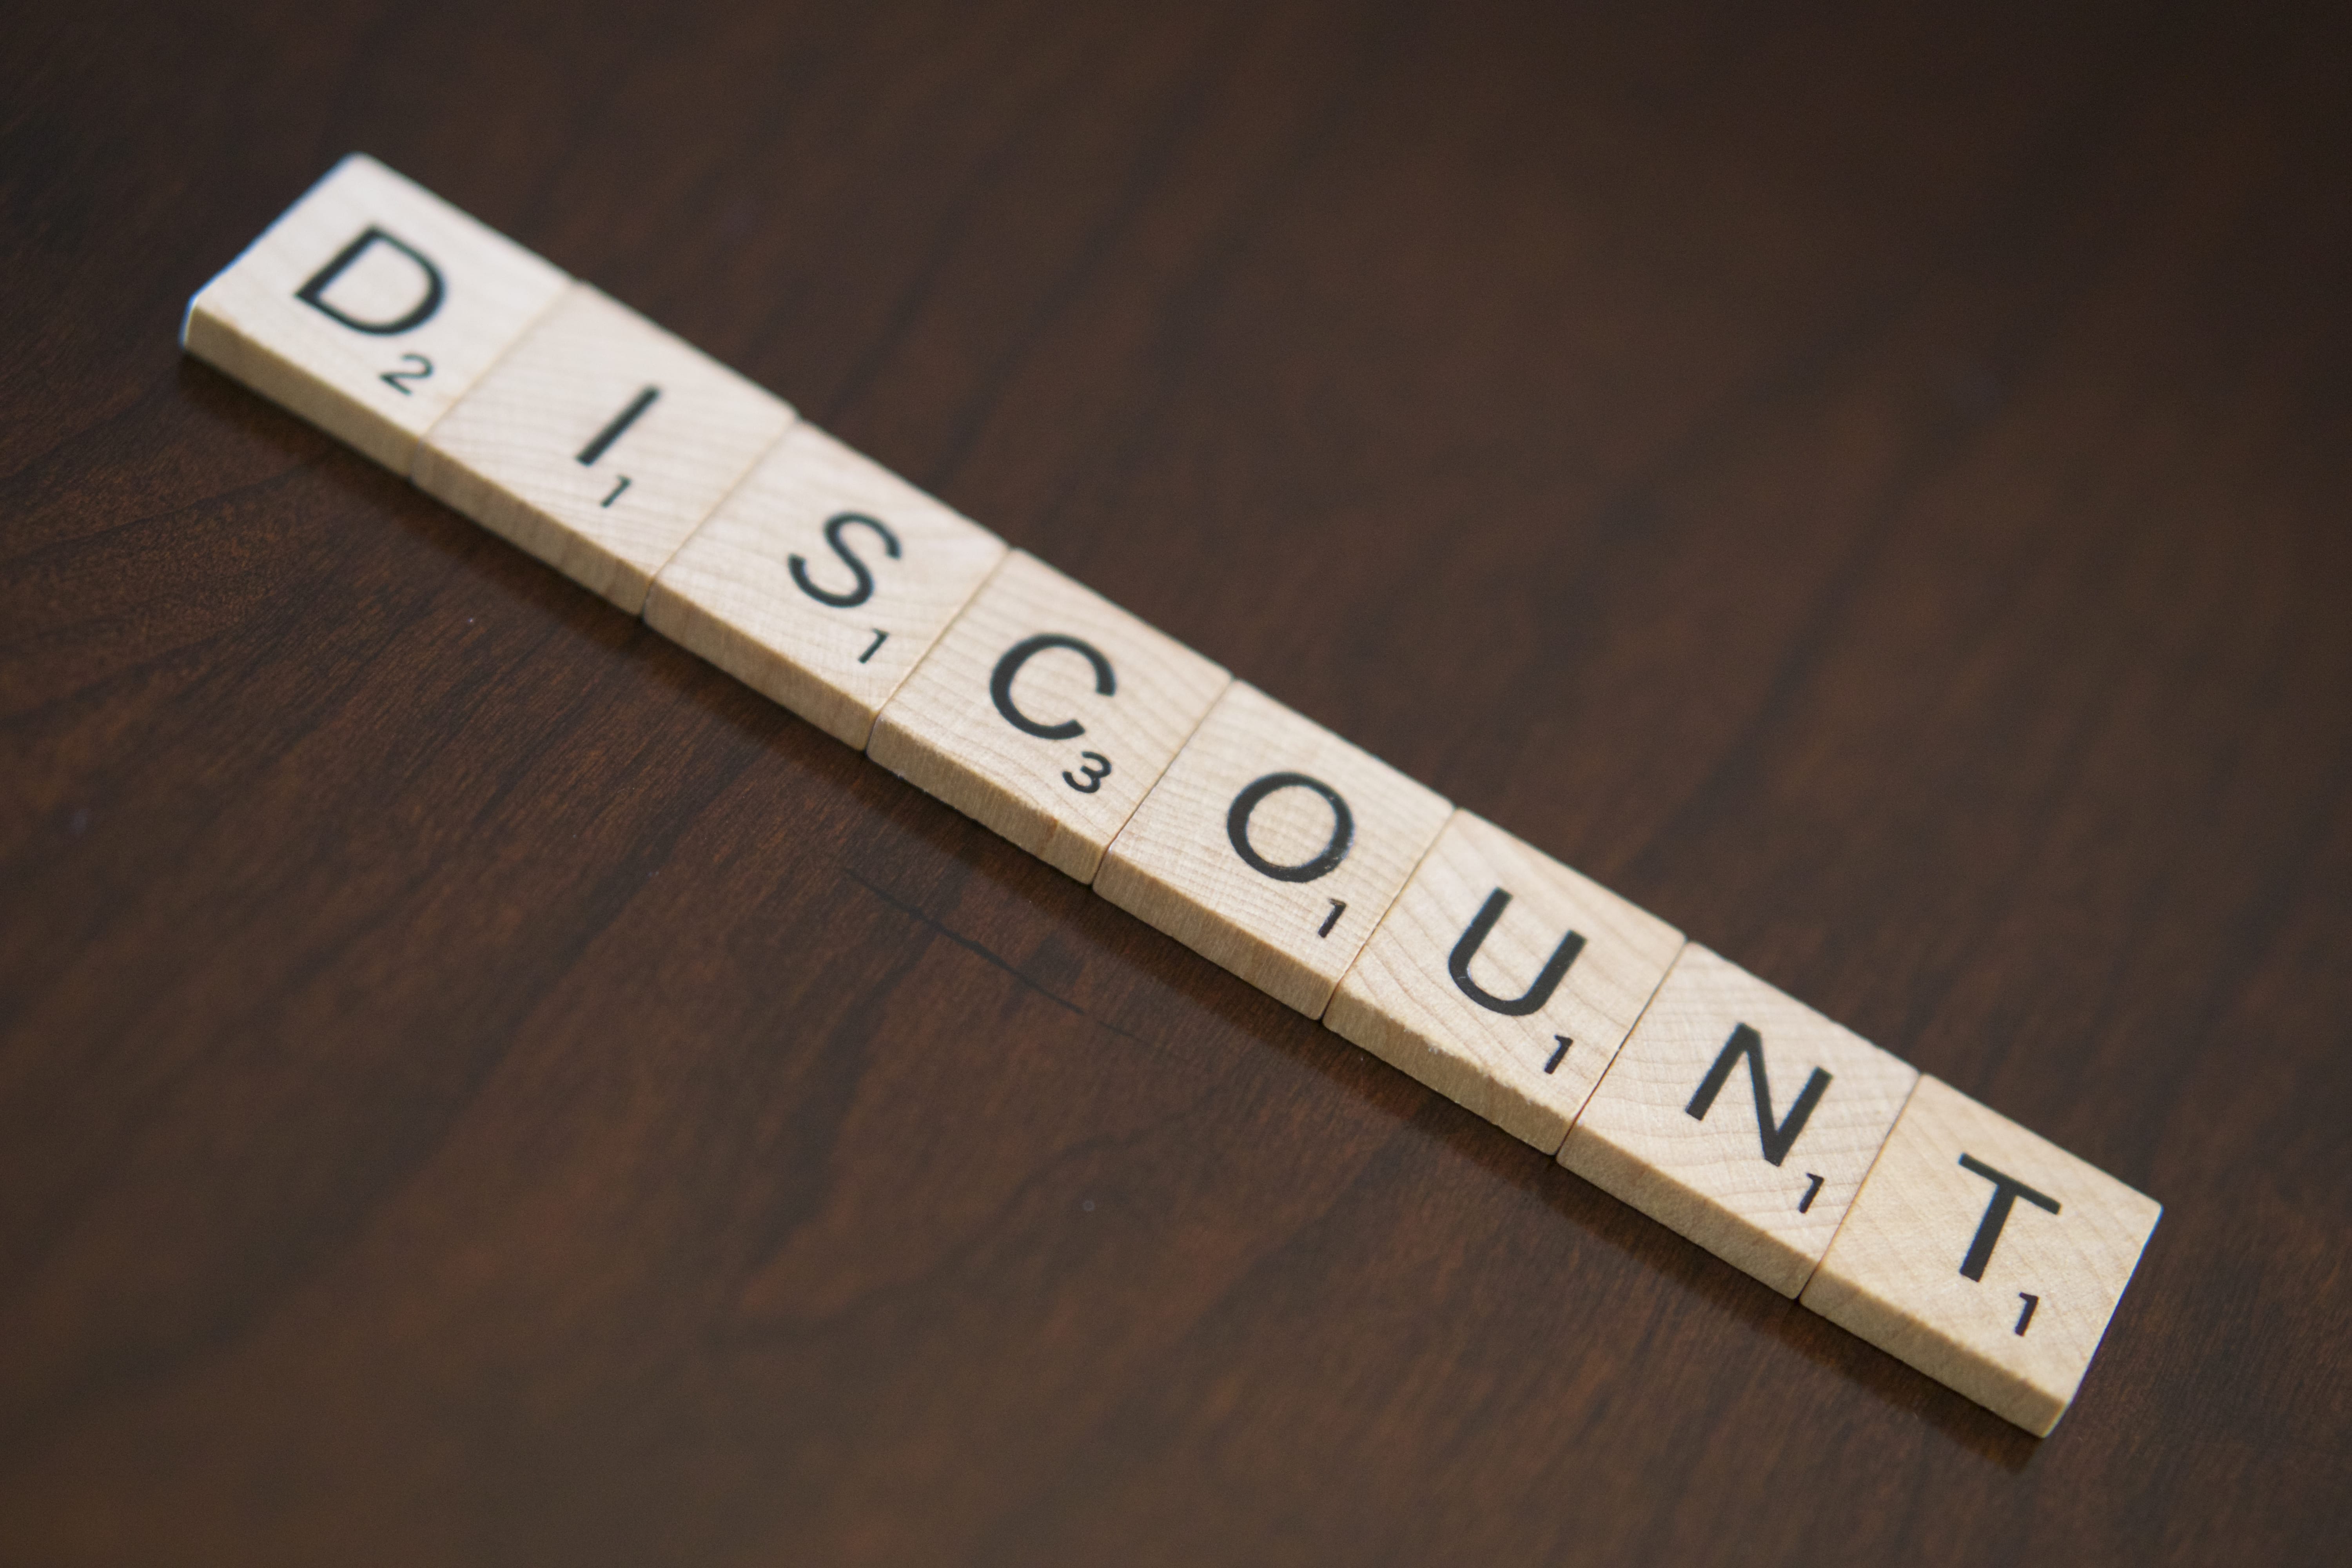 Member Discount Program Changes - MIBluesPerspectives